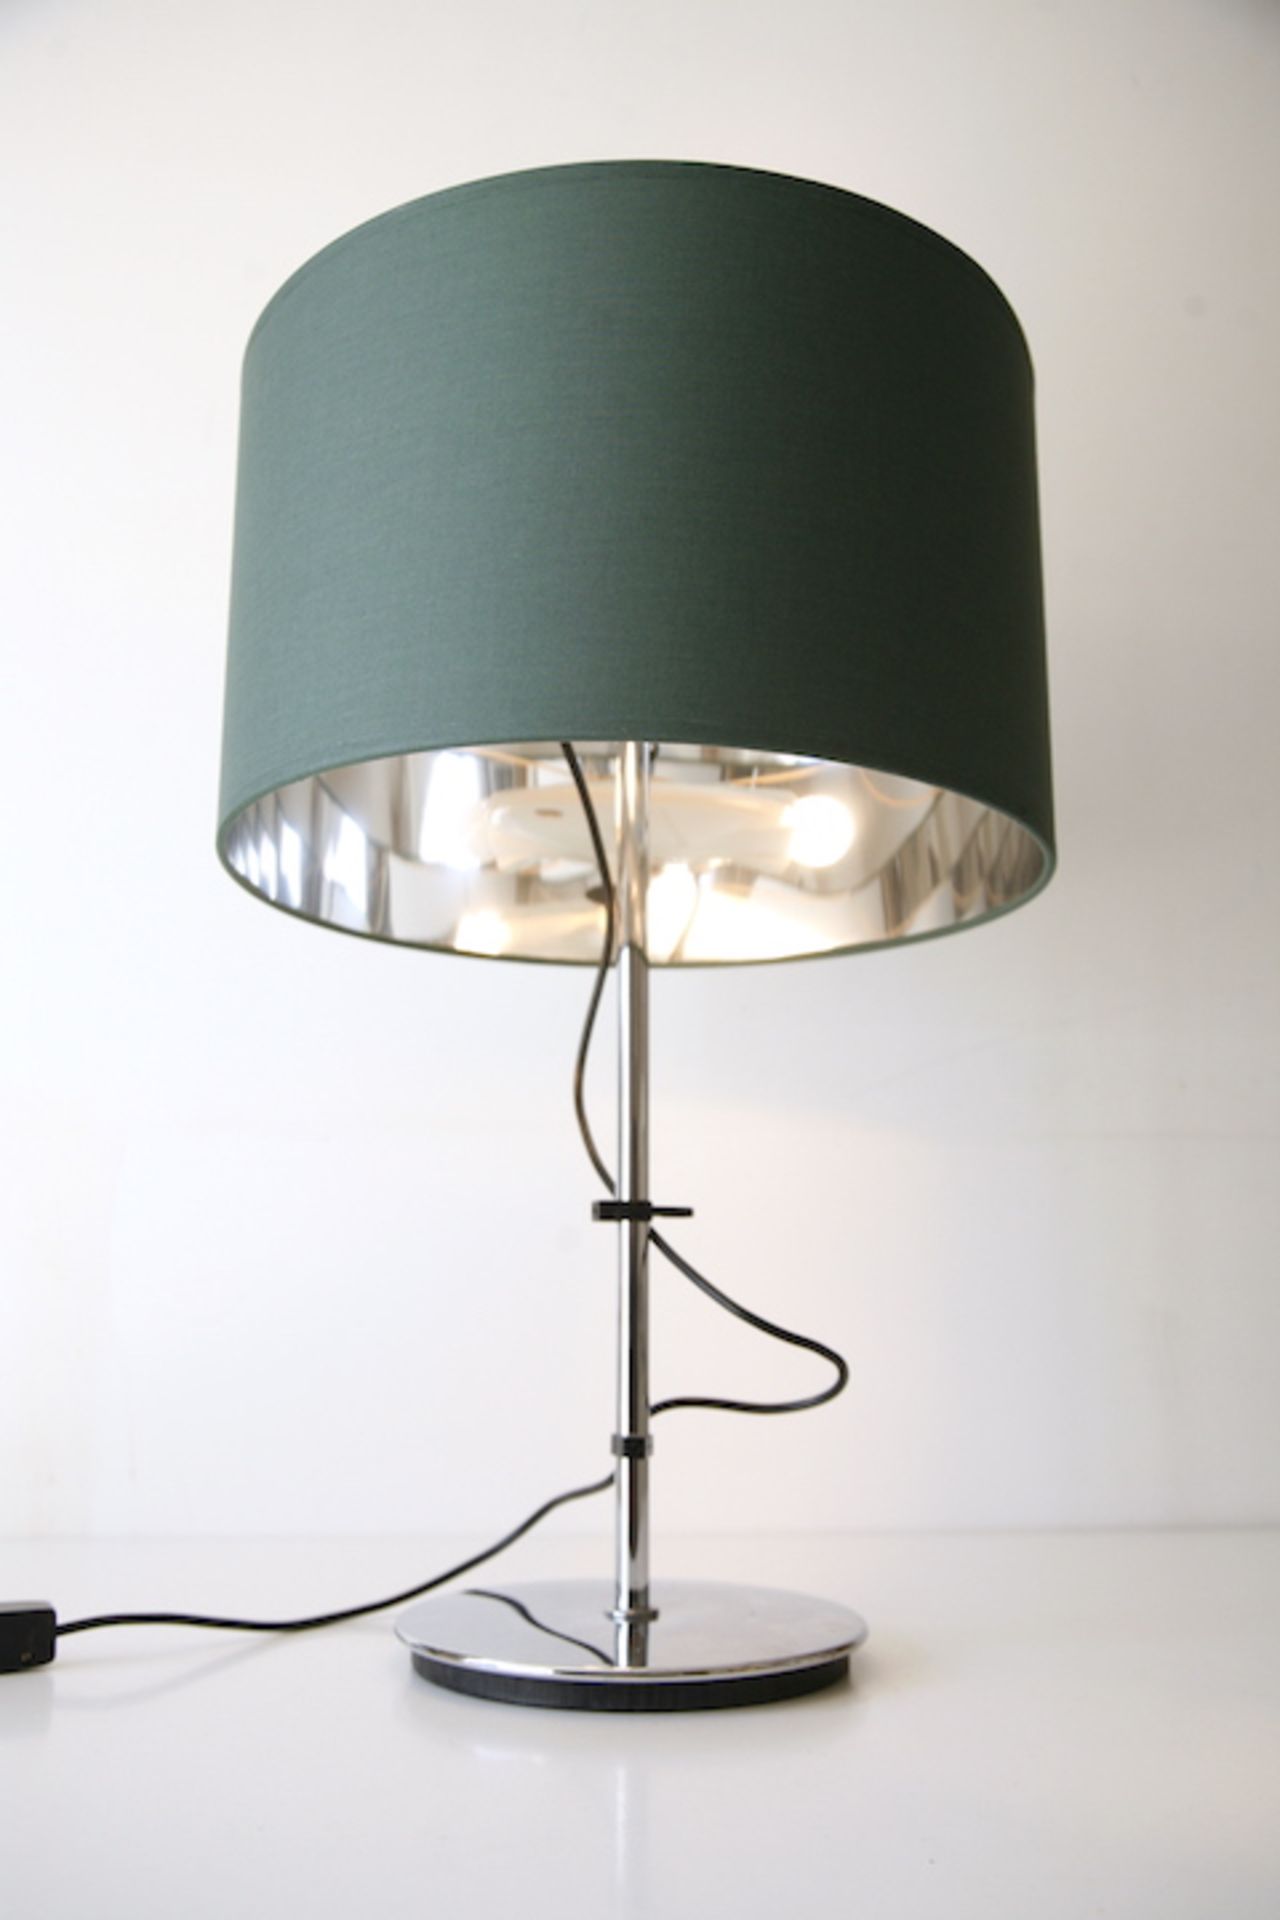 VINTAGE 20TH CENTURY GERMAN DESK / TABLE LAMP - Image 2 of 6